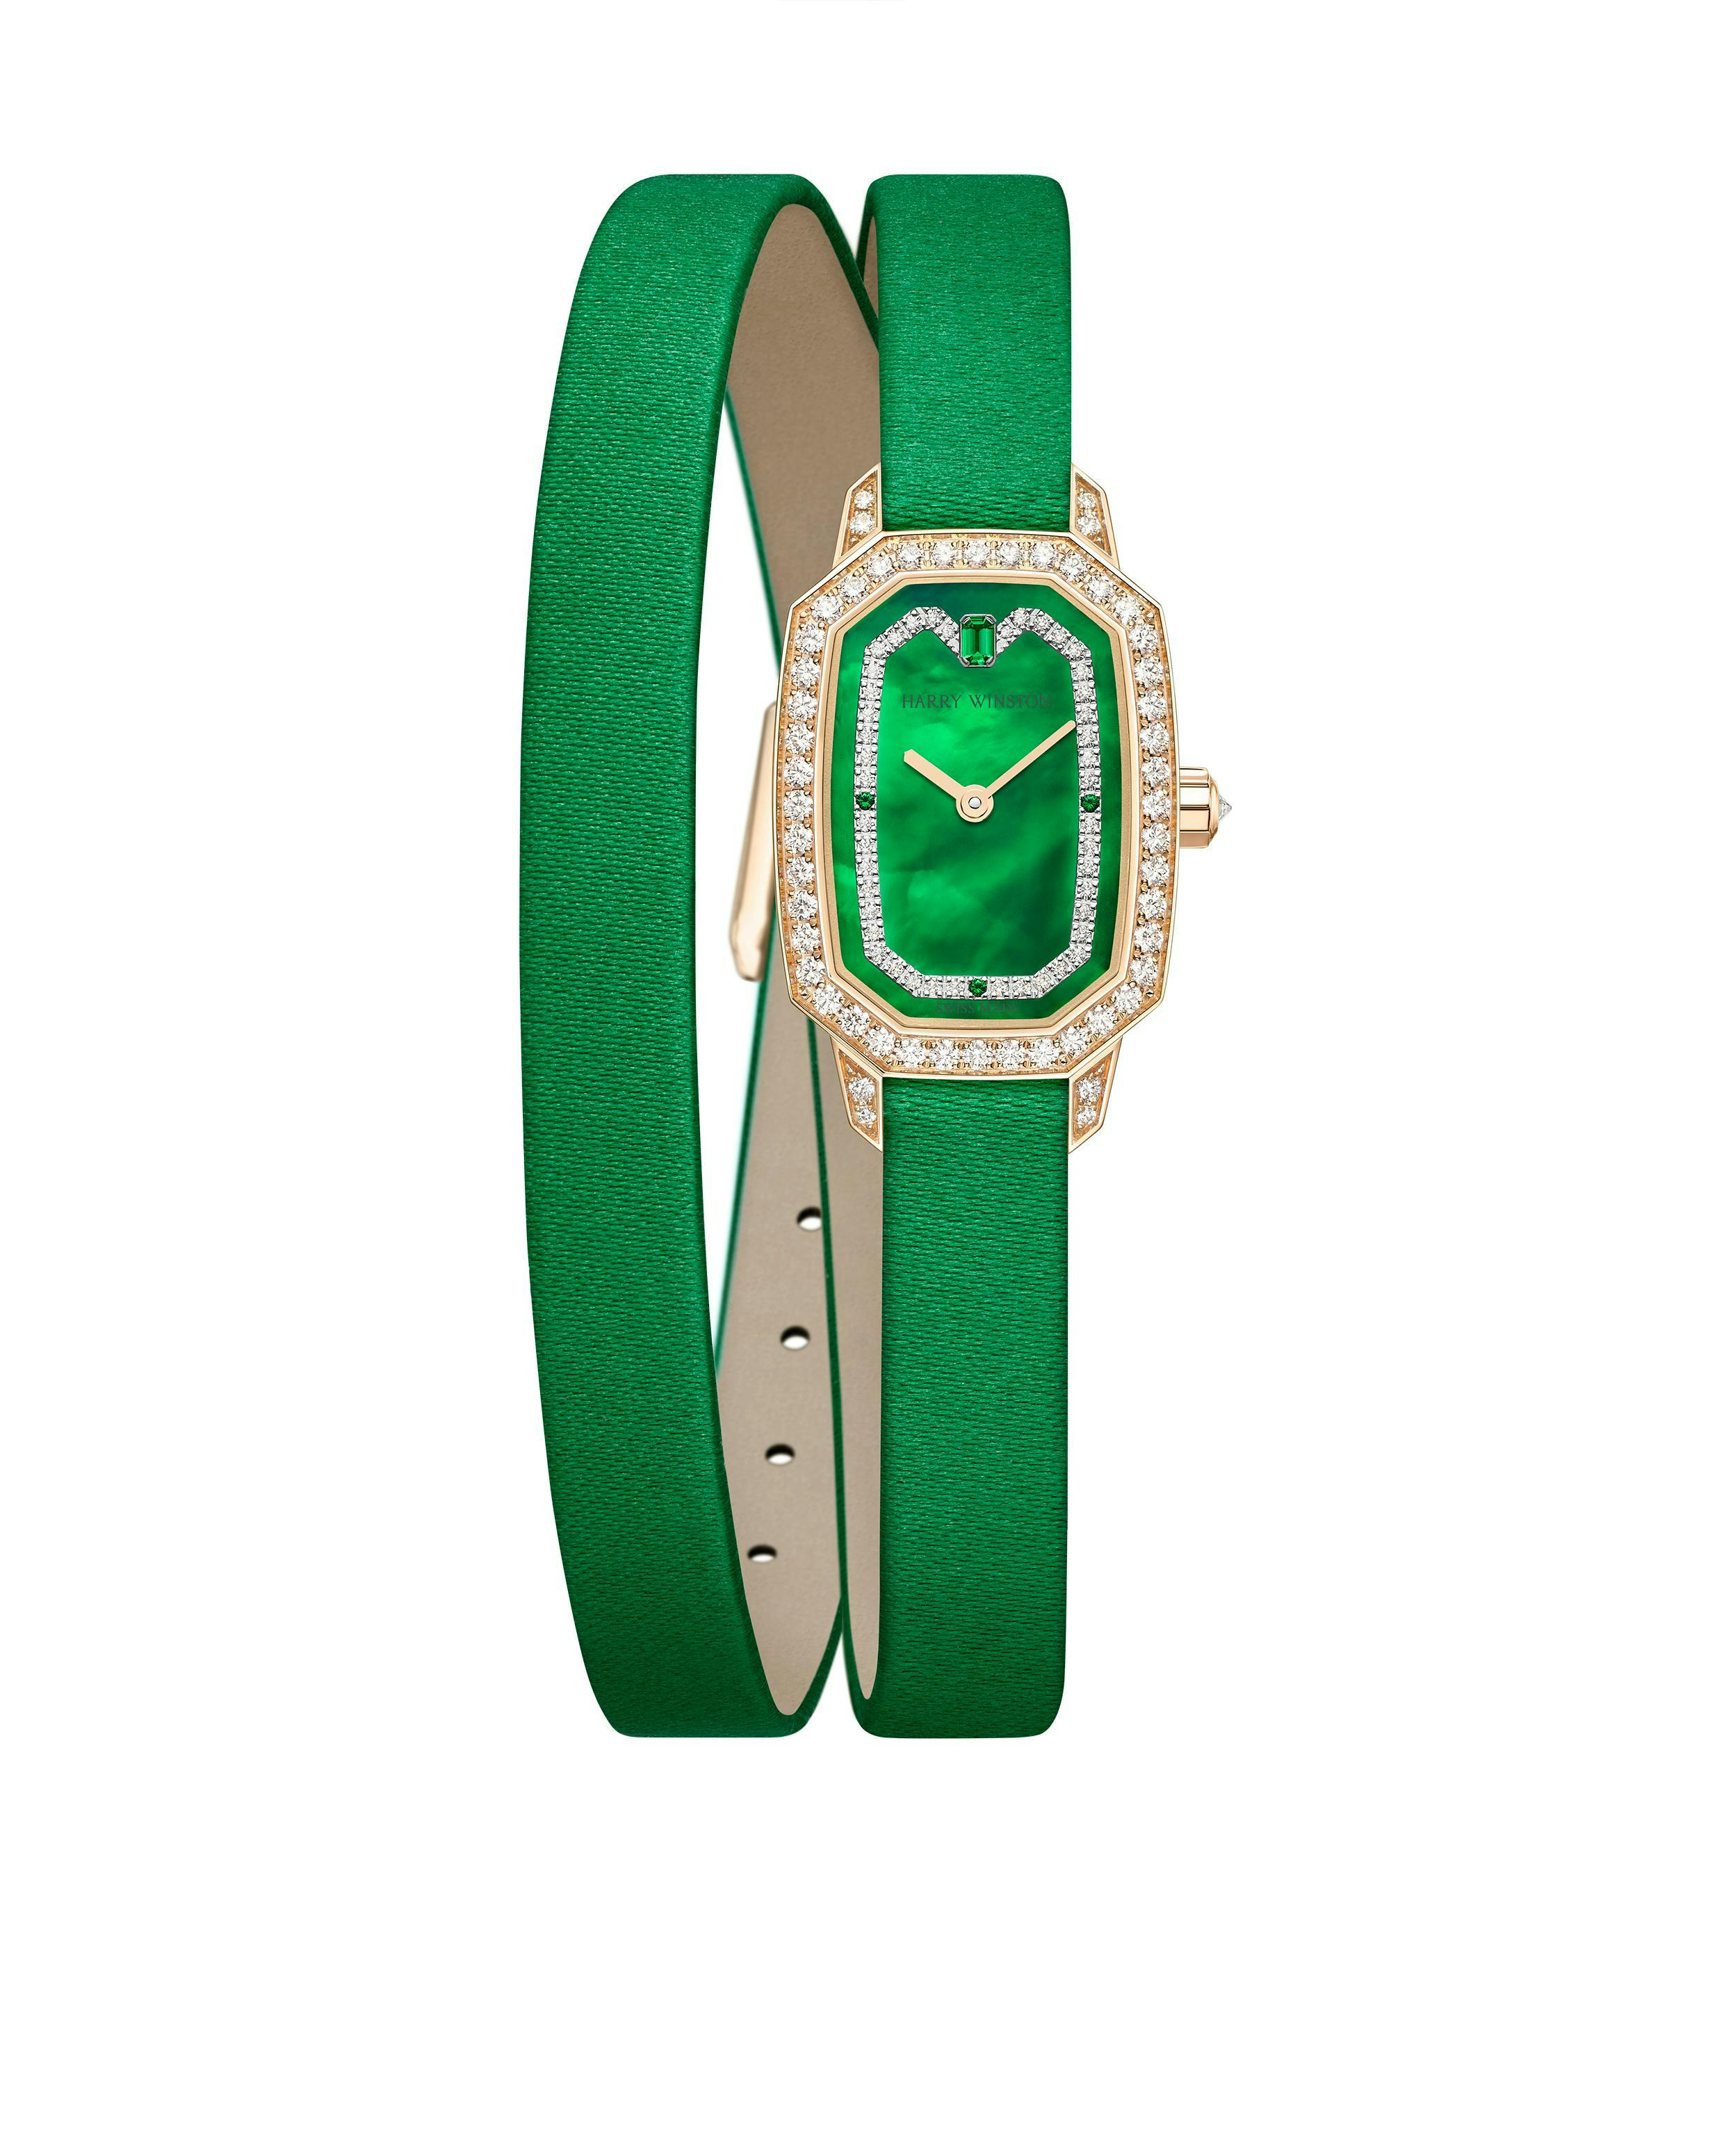 accessories wristwatch arm body part person gemstone jewelry jade ornament